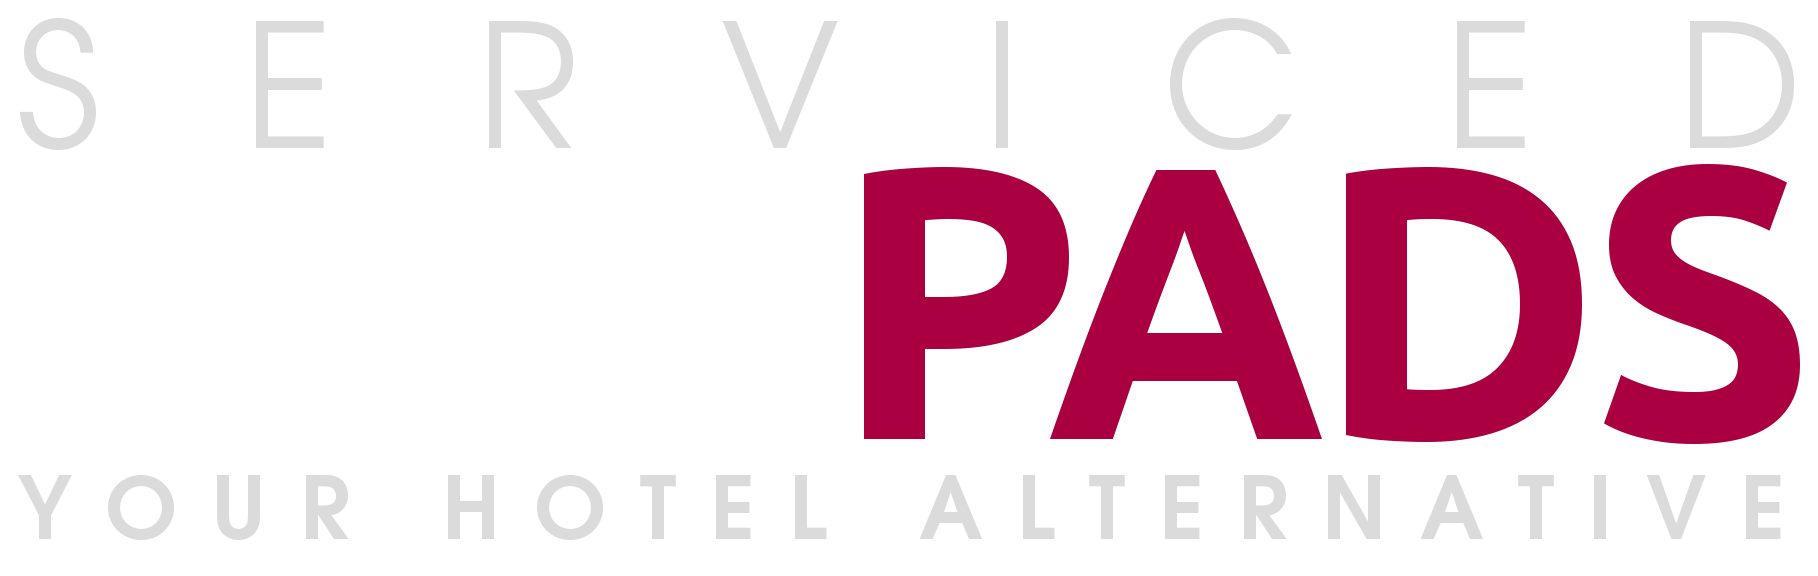 Serviced City Pads Logo